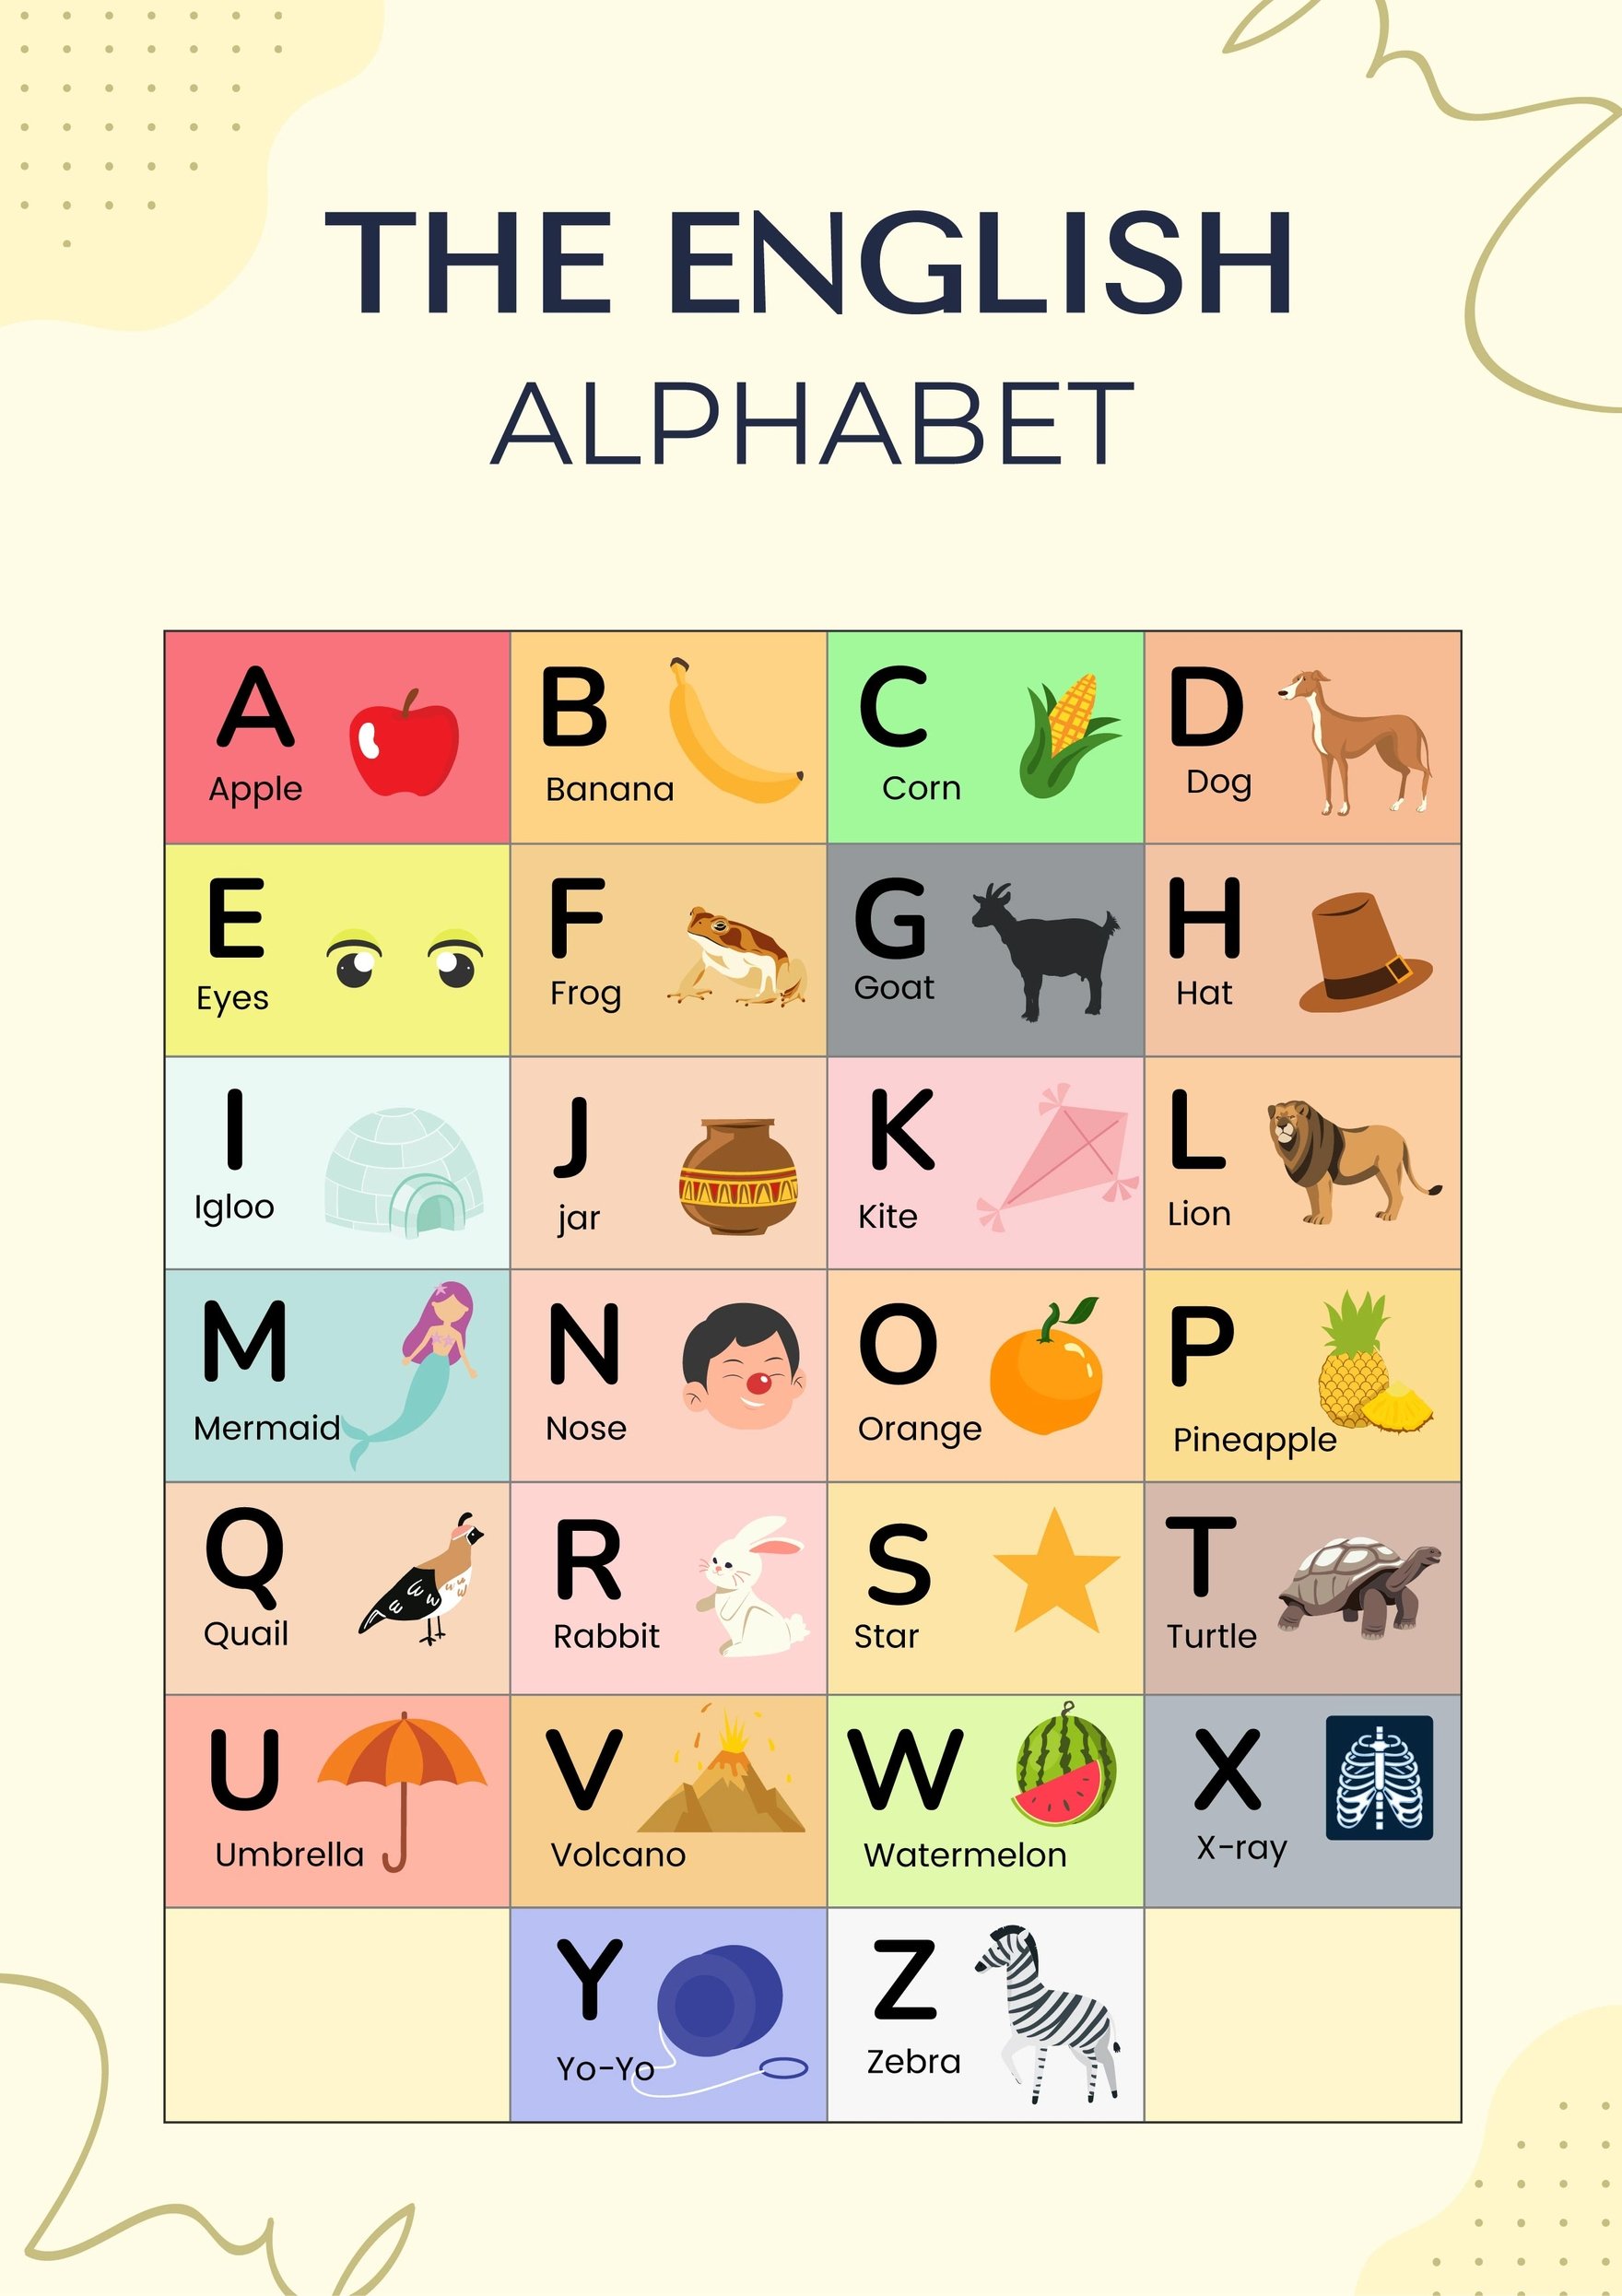 English Alphabet Chart With Pictures | glassbottlesmanufacturer.com